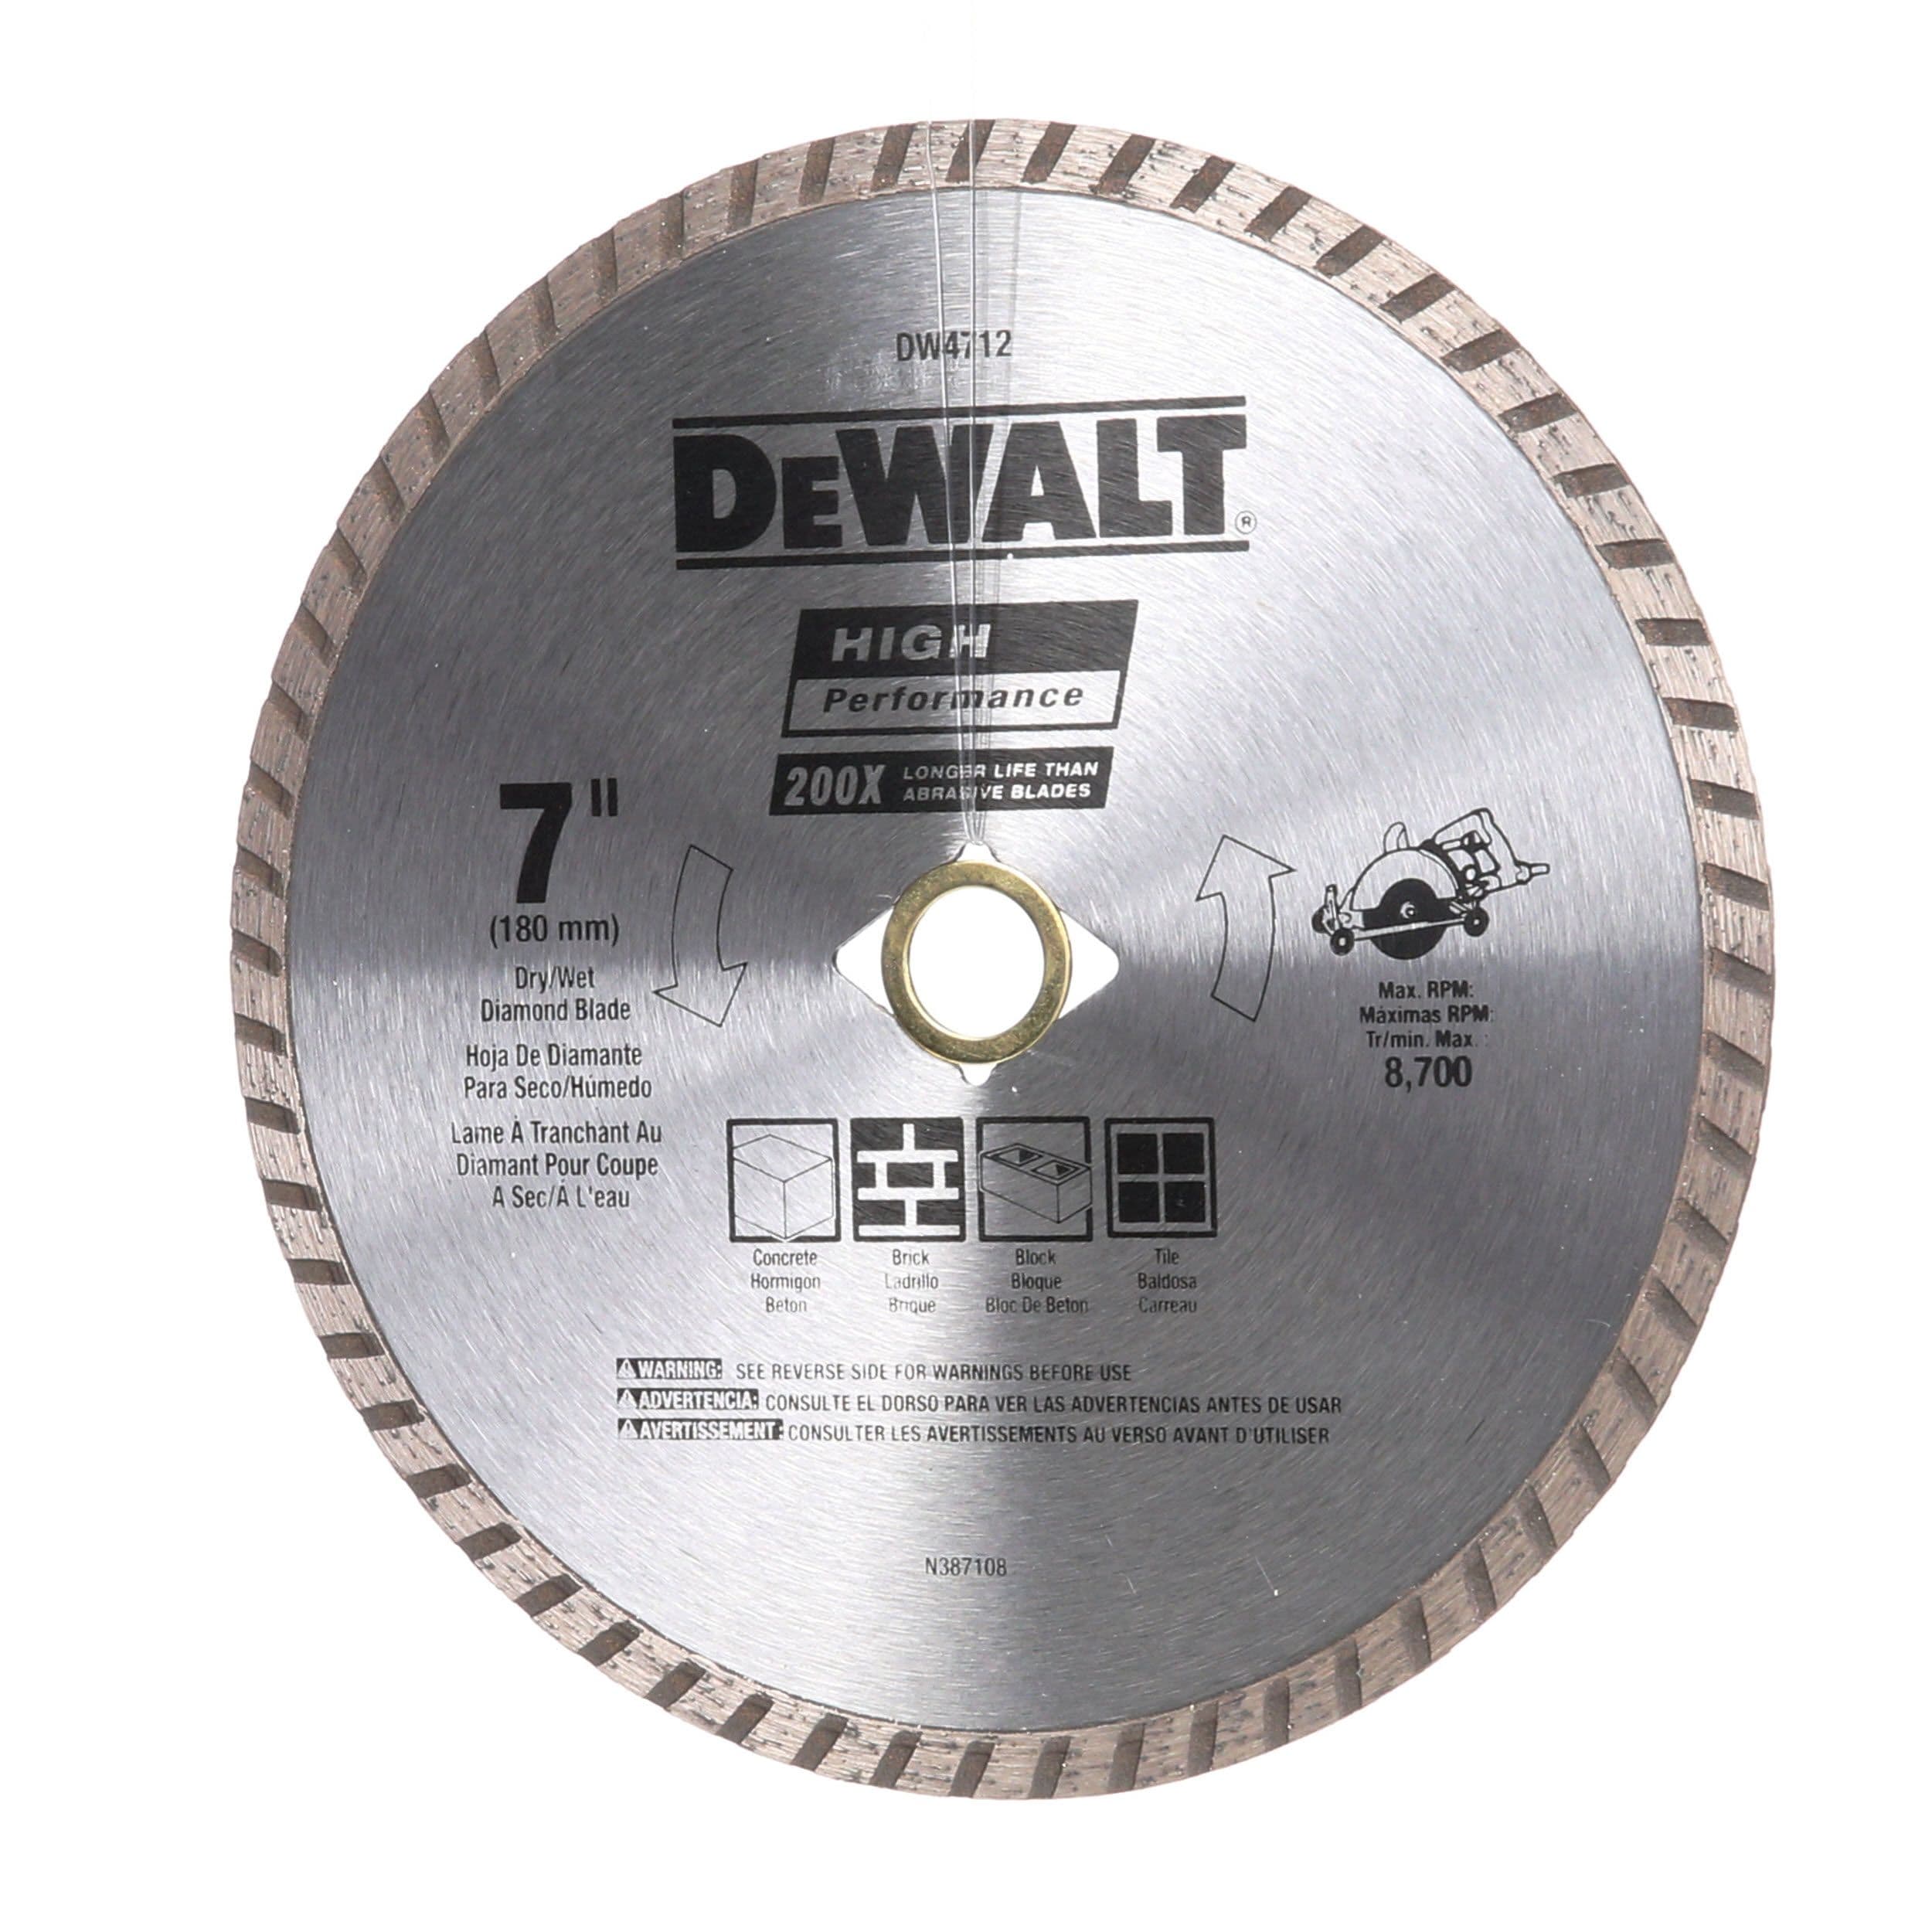 Details about   DeWalt High Performance Diamond Masonry Blade 7" DW4712 